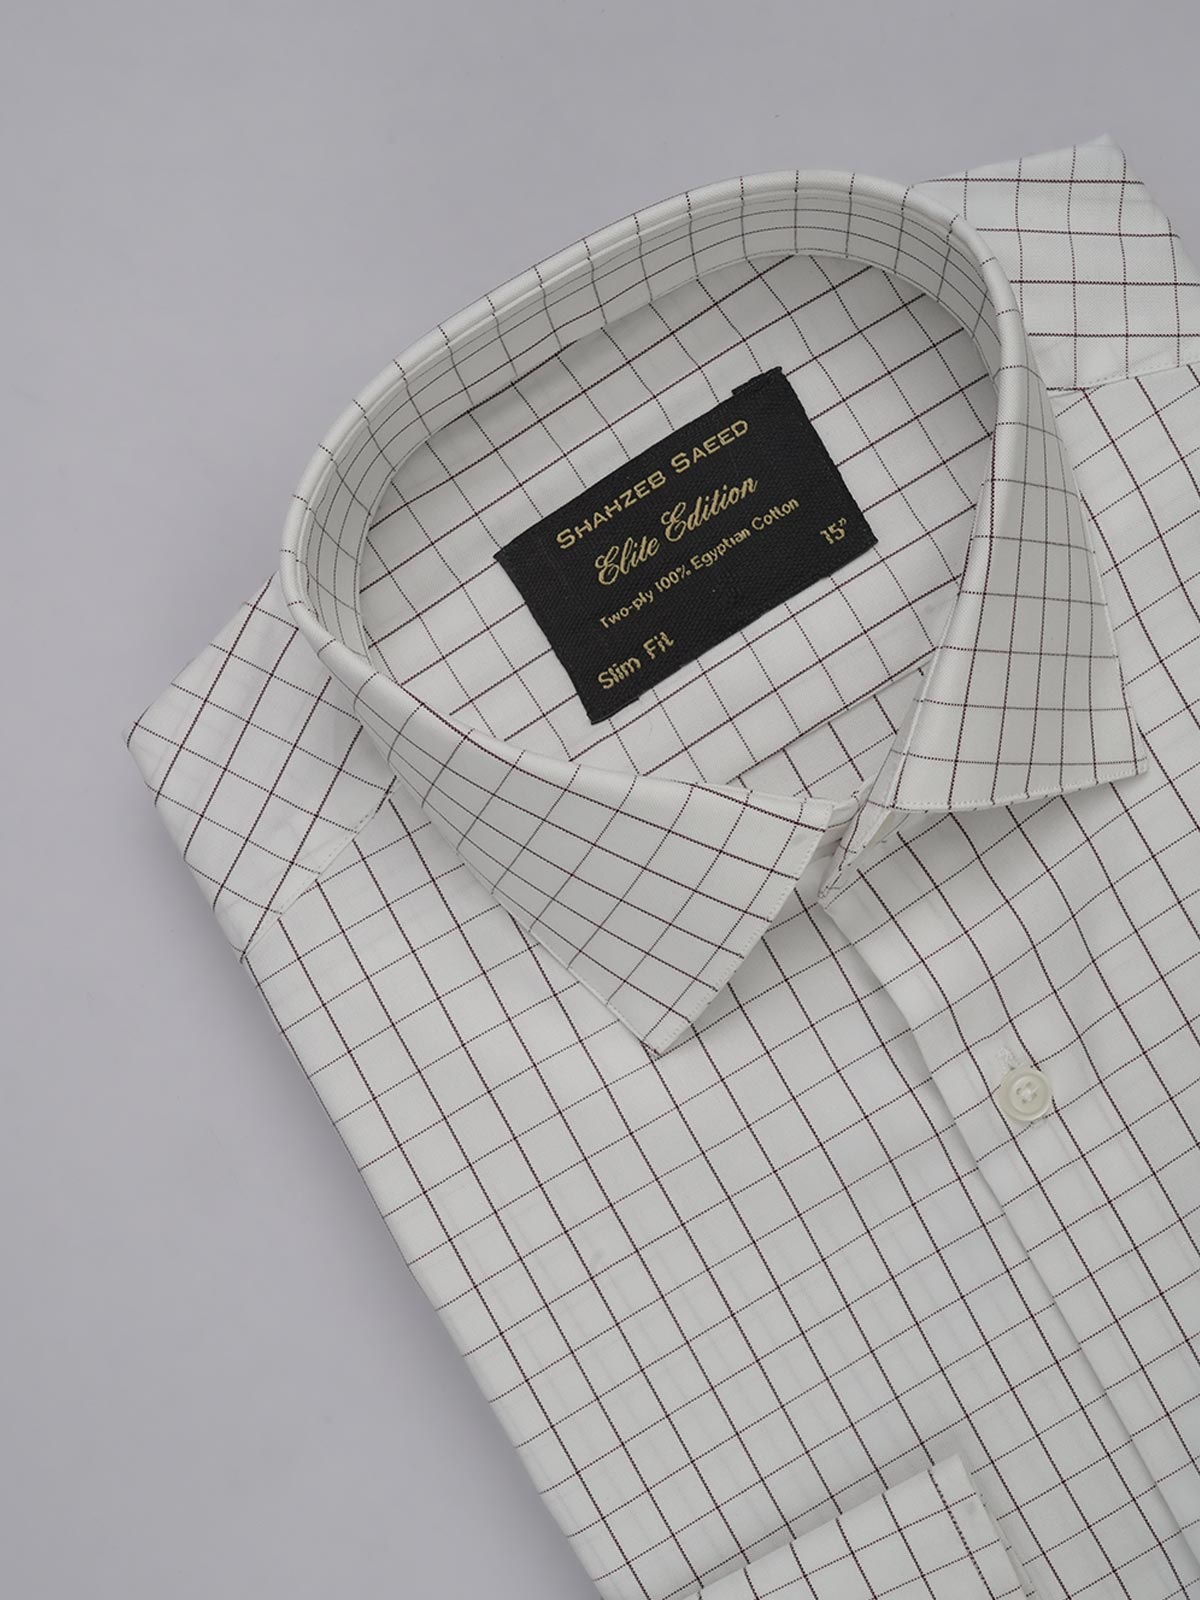 Brown & White Checkered, Elite Edition, French Collar Men’s Formal Shirt (FS-434)